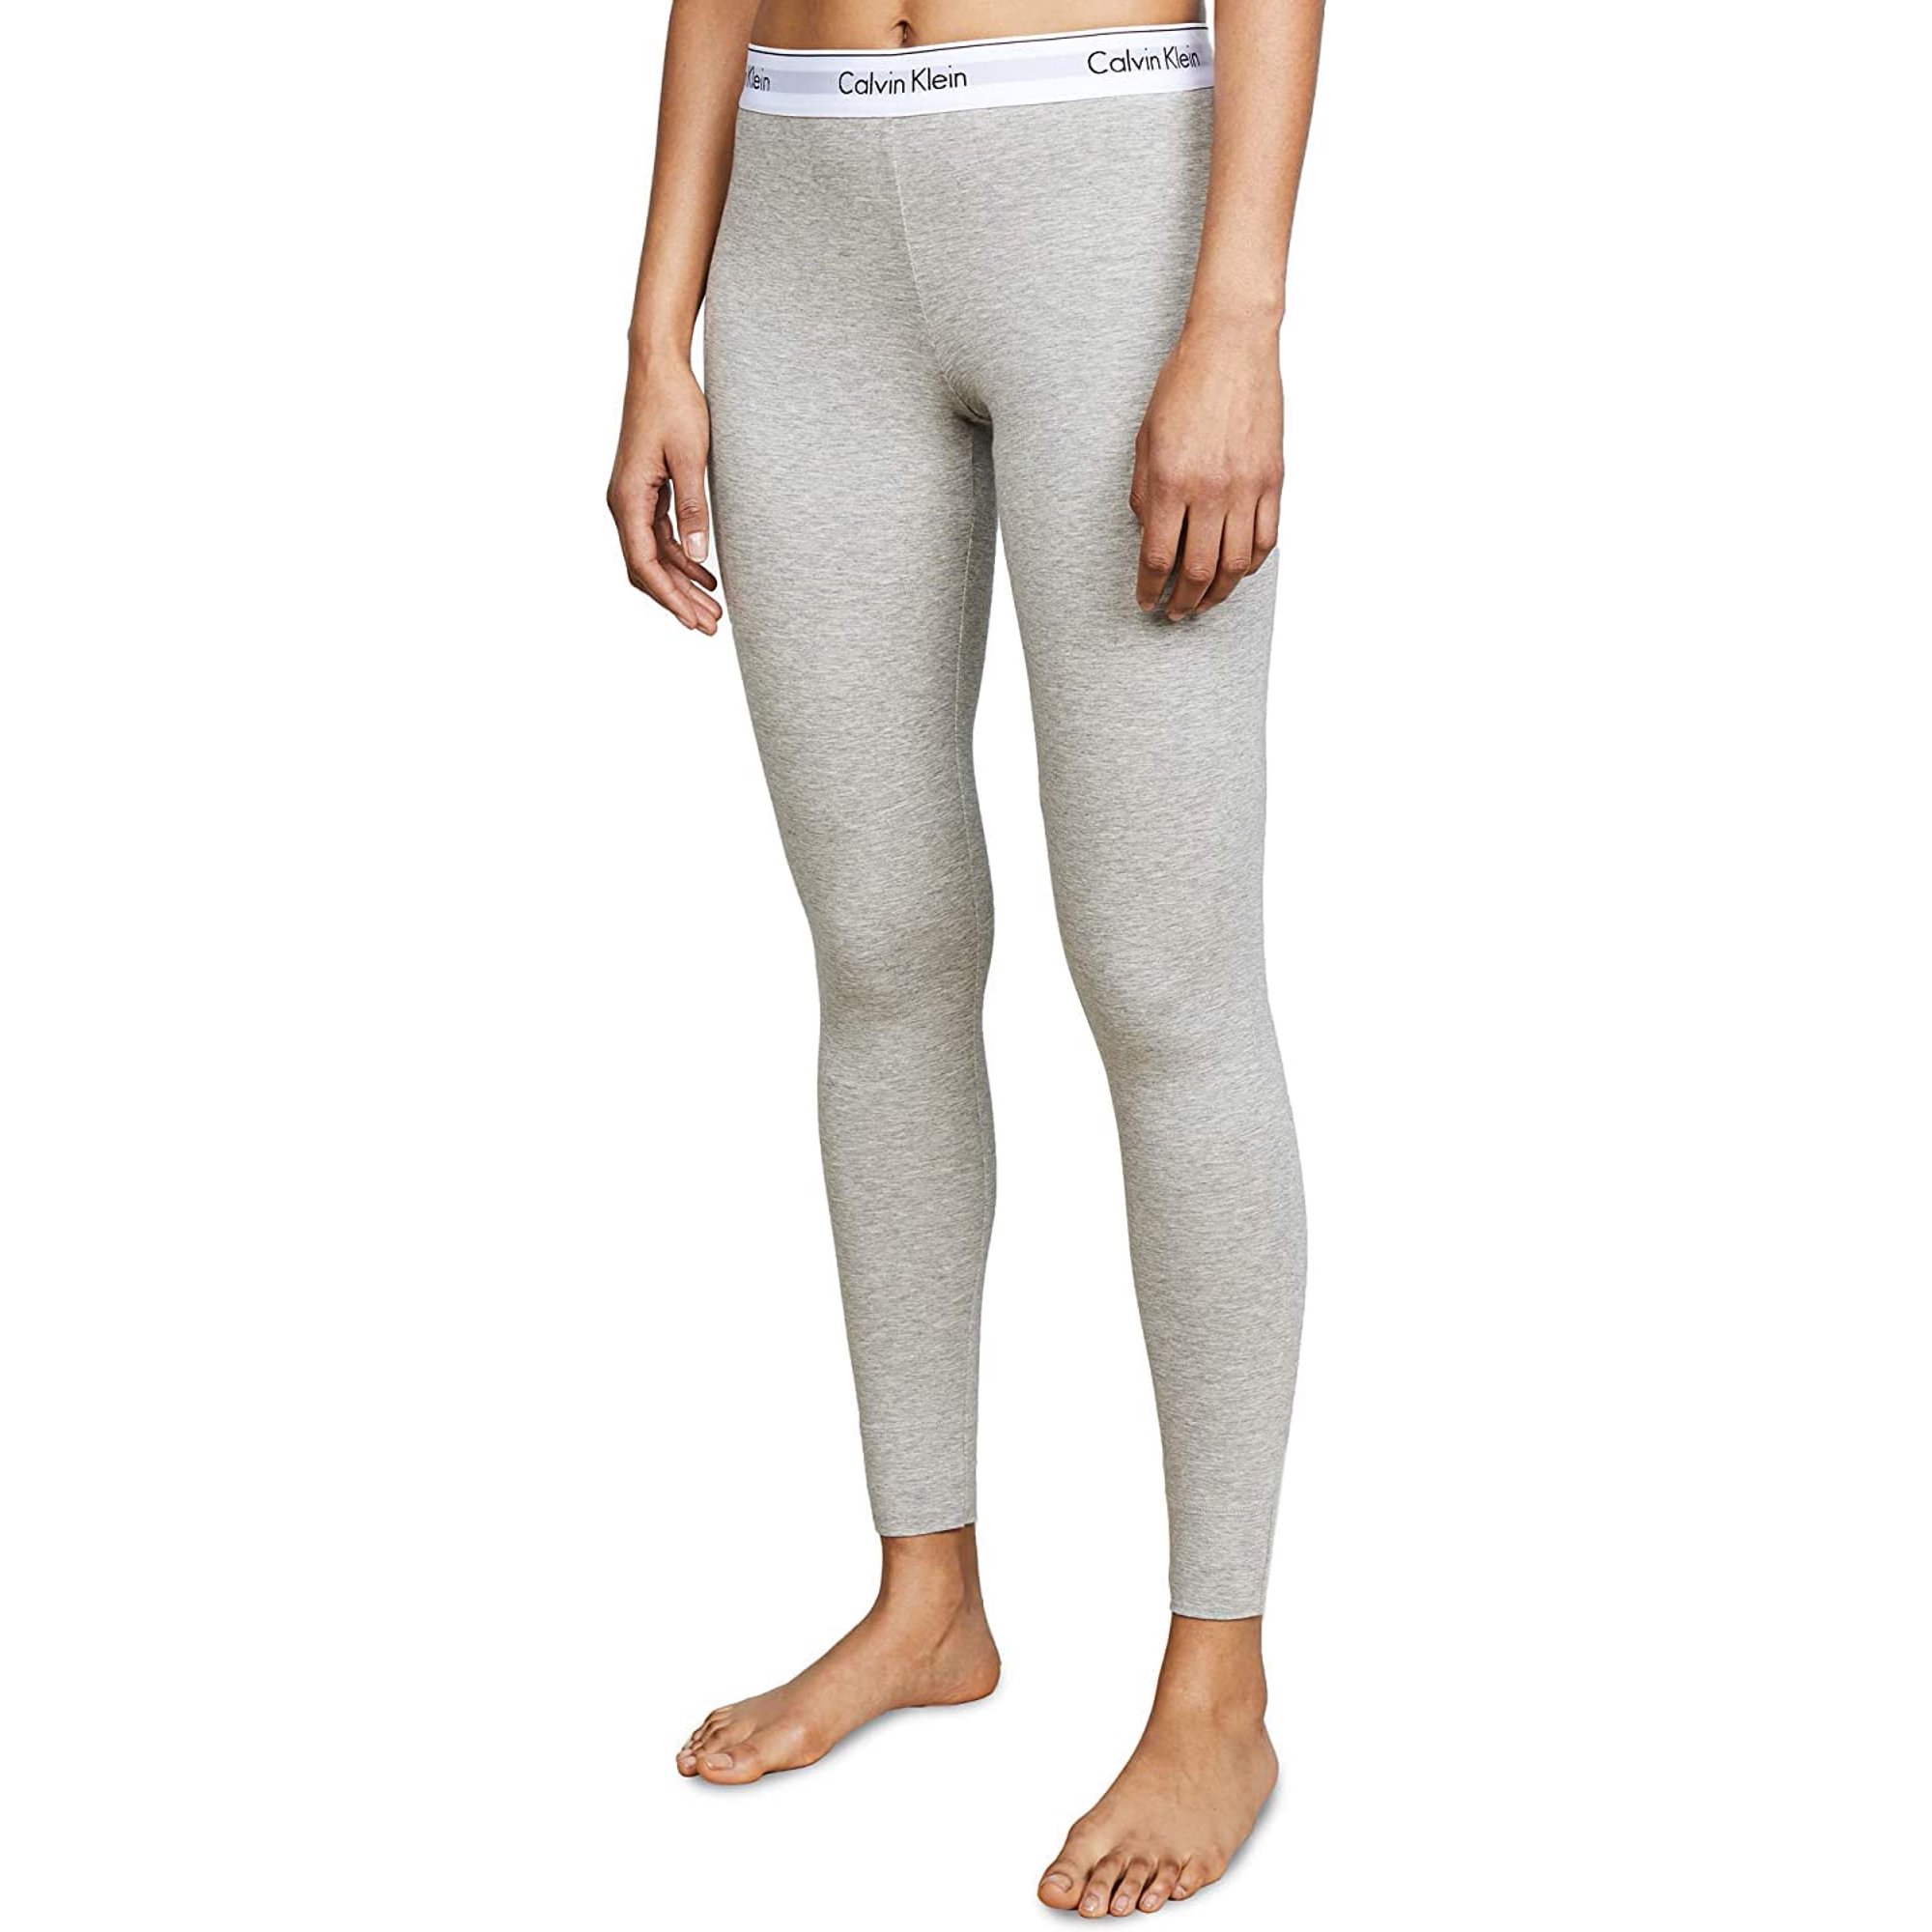 Calvin Klein Women's Modern Cotton Legging, Grey Heather, l | Walmart Canada